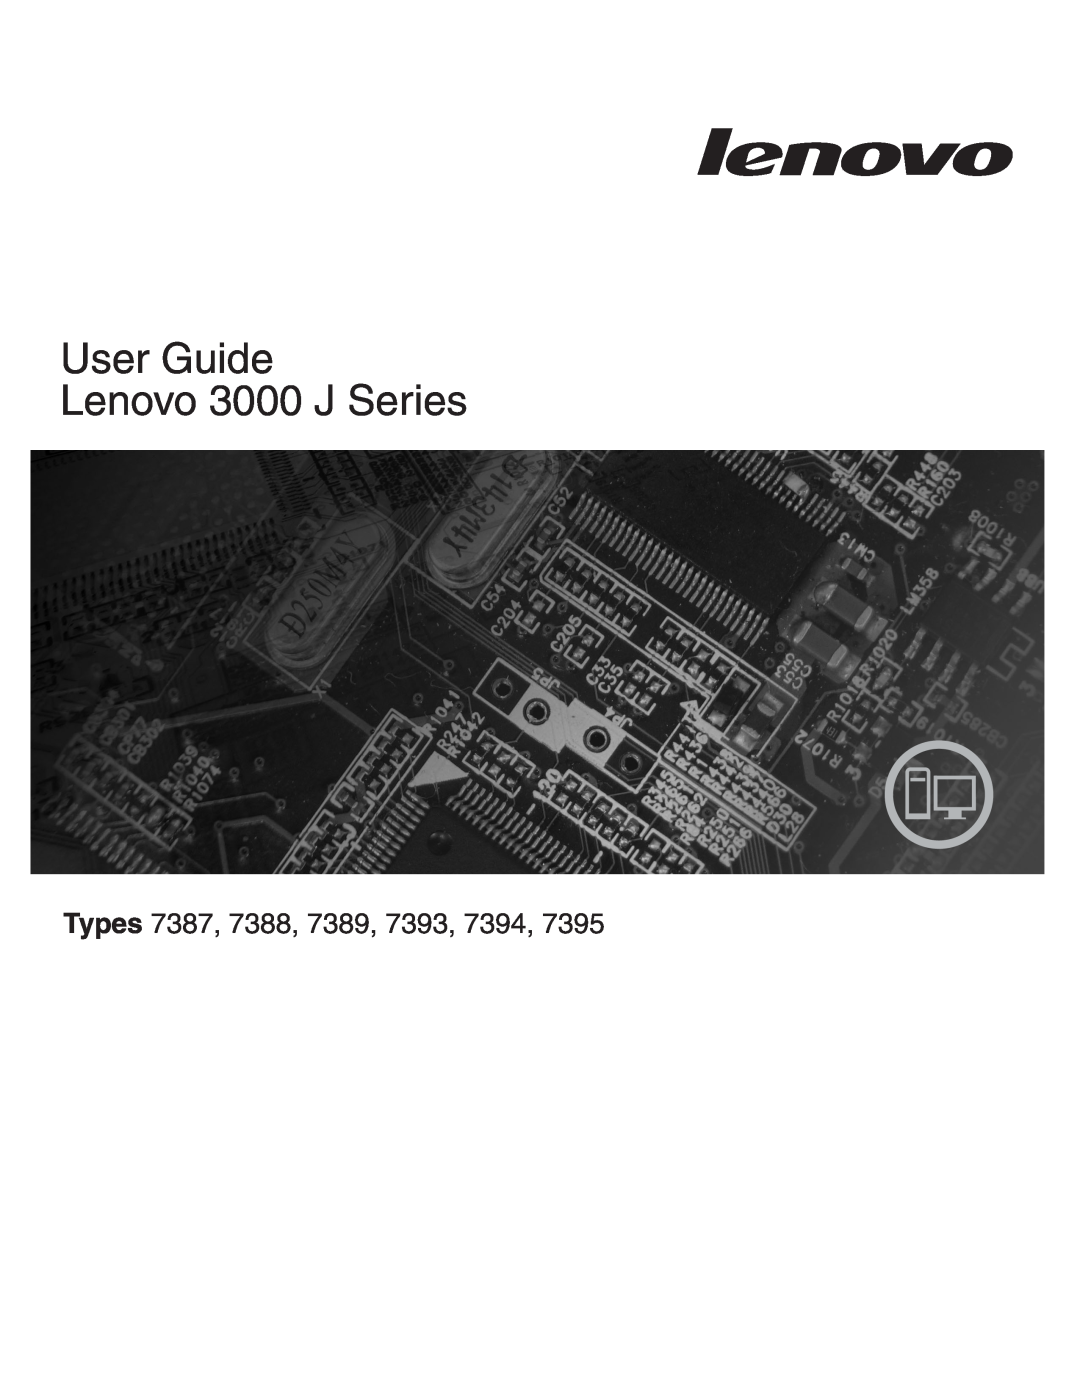 Lenovo manual User Guide Lenovo 3000 J Series, Types 7387, 7388, 7389, 7393, 7394 